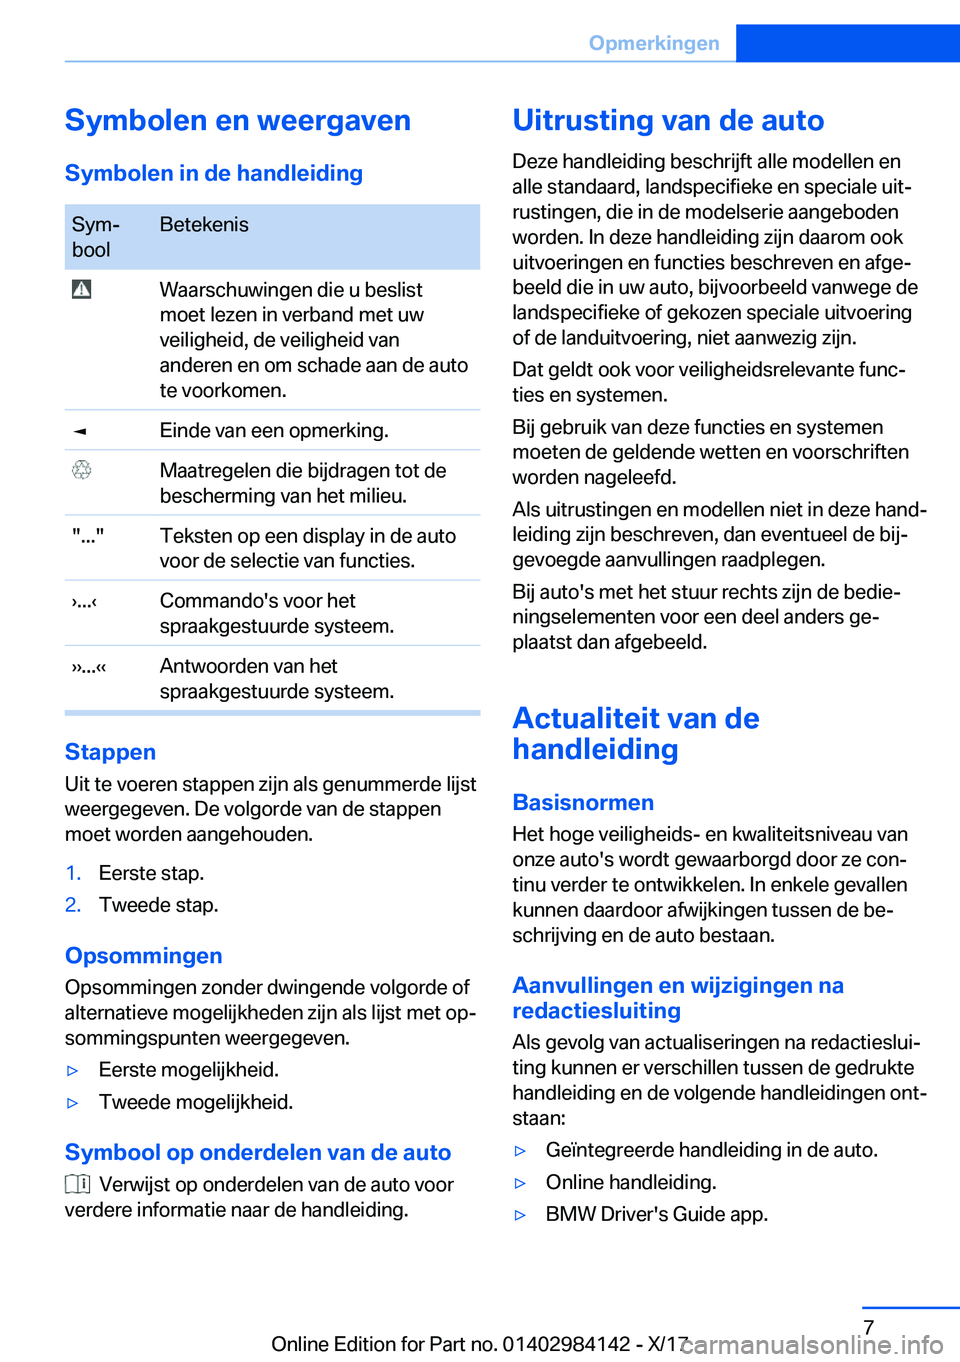 BMW 2 SERIES COUPE 2018  Instructieboekjes (in Dutch) �S�y�m�b�o�l�e�n��e�n��w�e�e�r�g�a�v�e�n�S�y�m�b�o�l�e�n��i�n��d�e��h�a�n�d�l�e�i�d�i�n�g�S�y�mj
�b�o�o�l�B�e�t�e�k�e�n�i�s� �W�a�a�r�s�c�h�u�w�i�n�g�e�n� �d�i�e� �u� �b�e�s�l�i�s�t
�m�o�e�t� �l